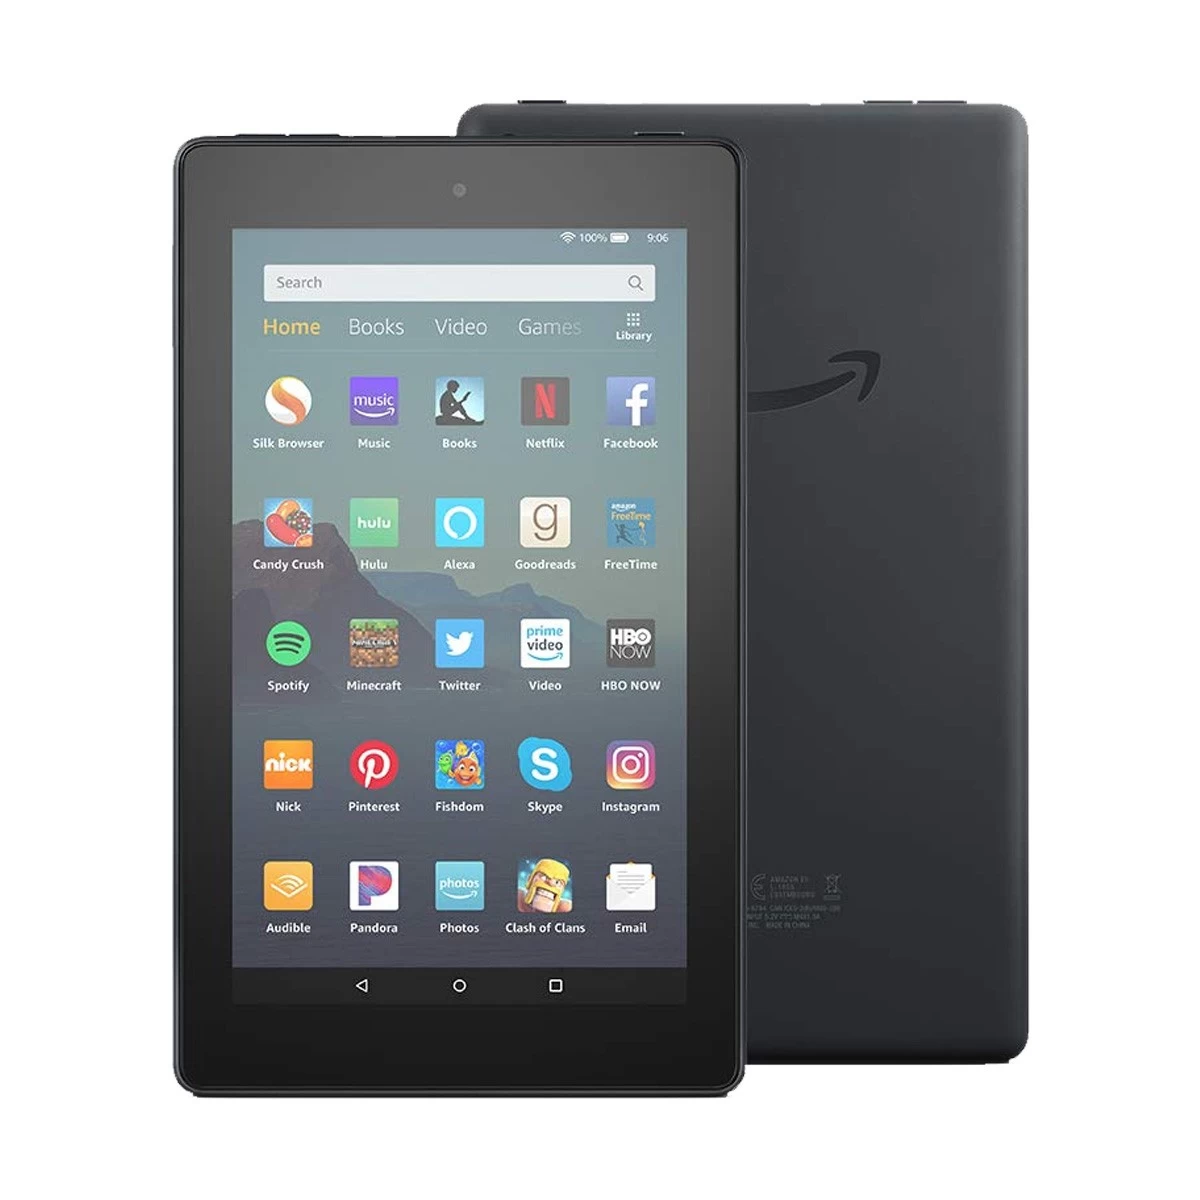 Amazon Fire 7 (9th Gen) (Quad Core 1.3 GHz, 1GB RAM, 16GB Storage, 7 Inch Display) Black Tablet with Alexa Apps